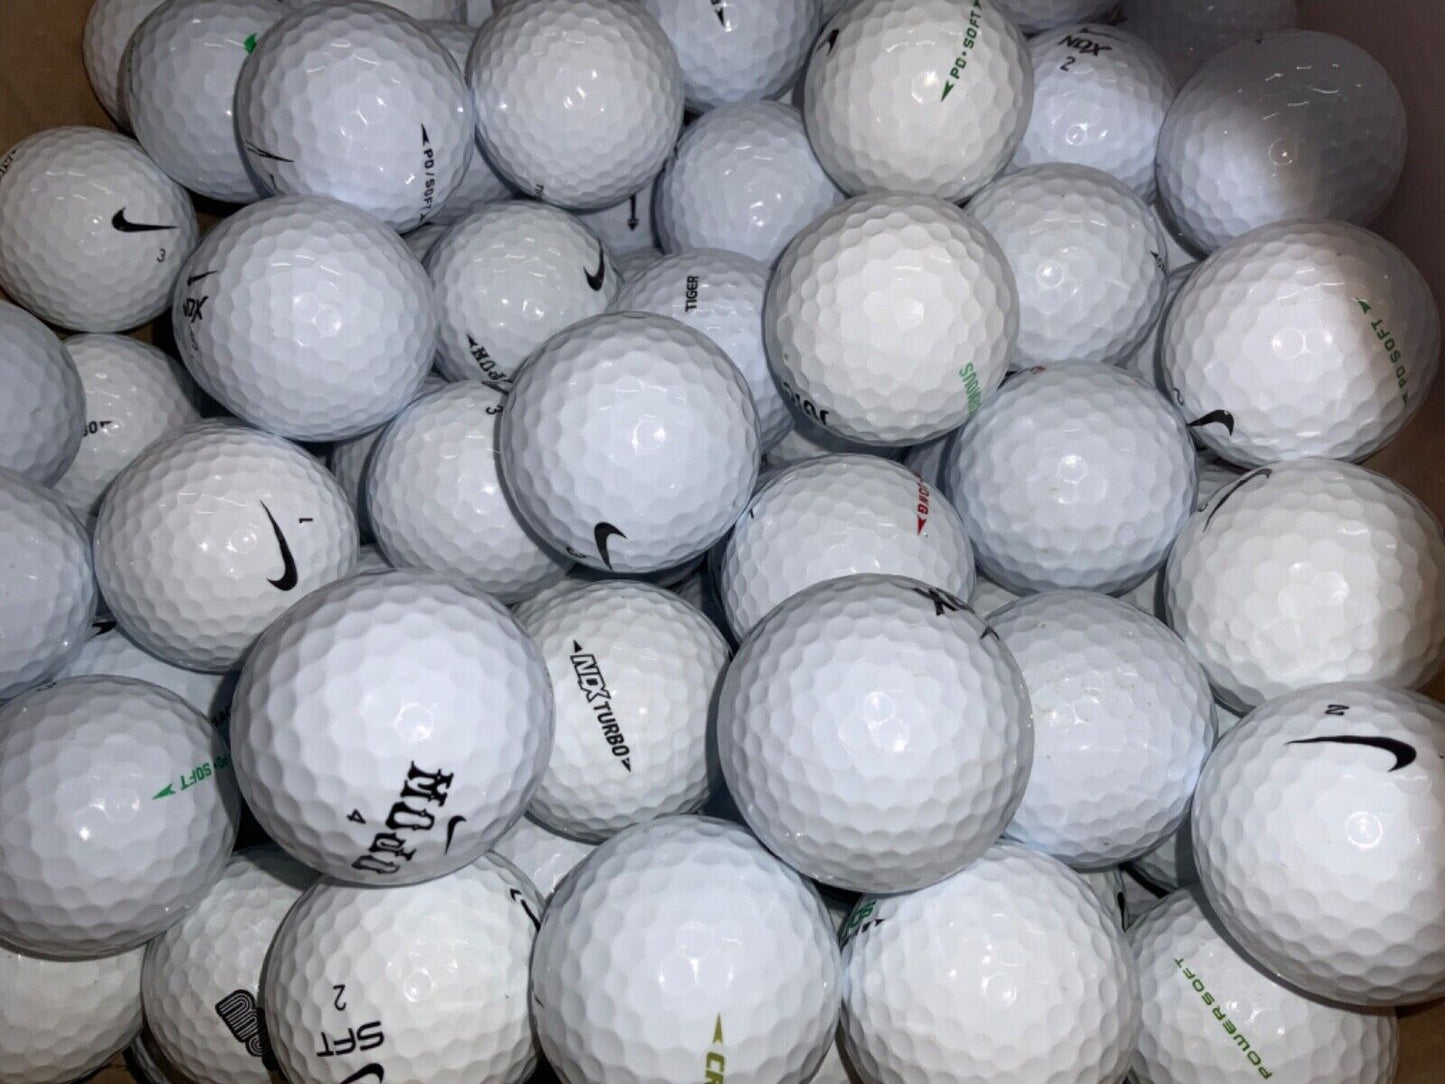 50 nike mixed golf balls pearl/pearl 1 grade